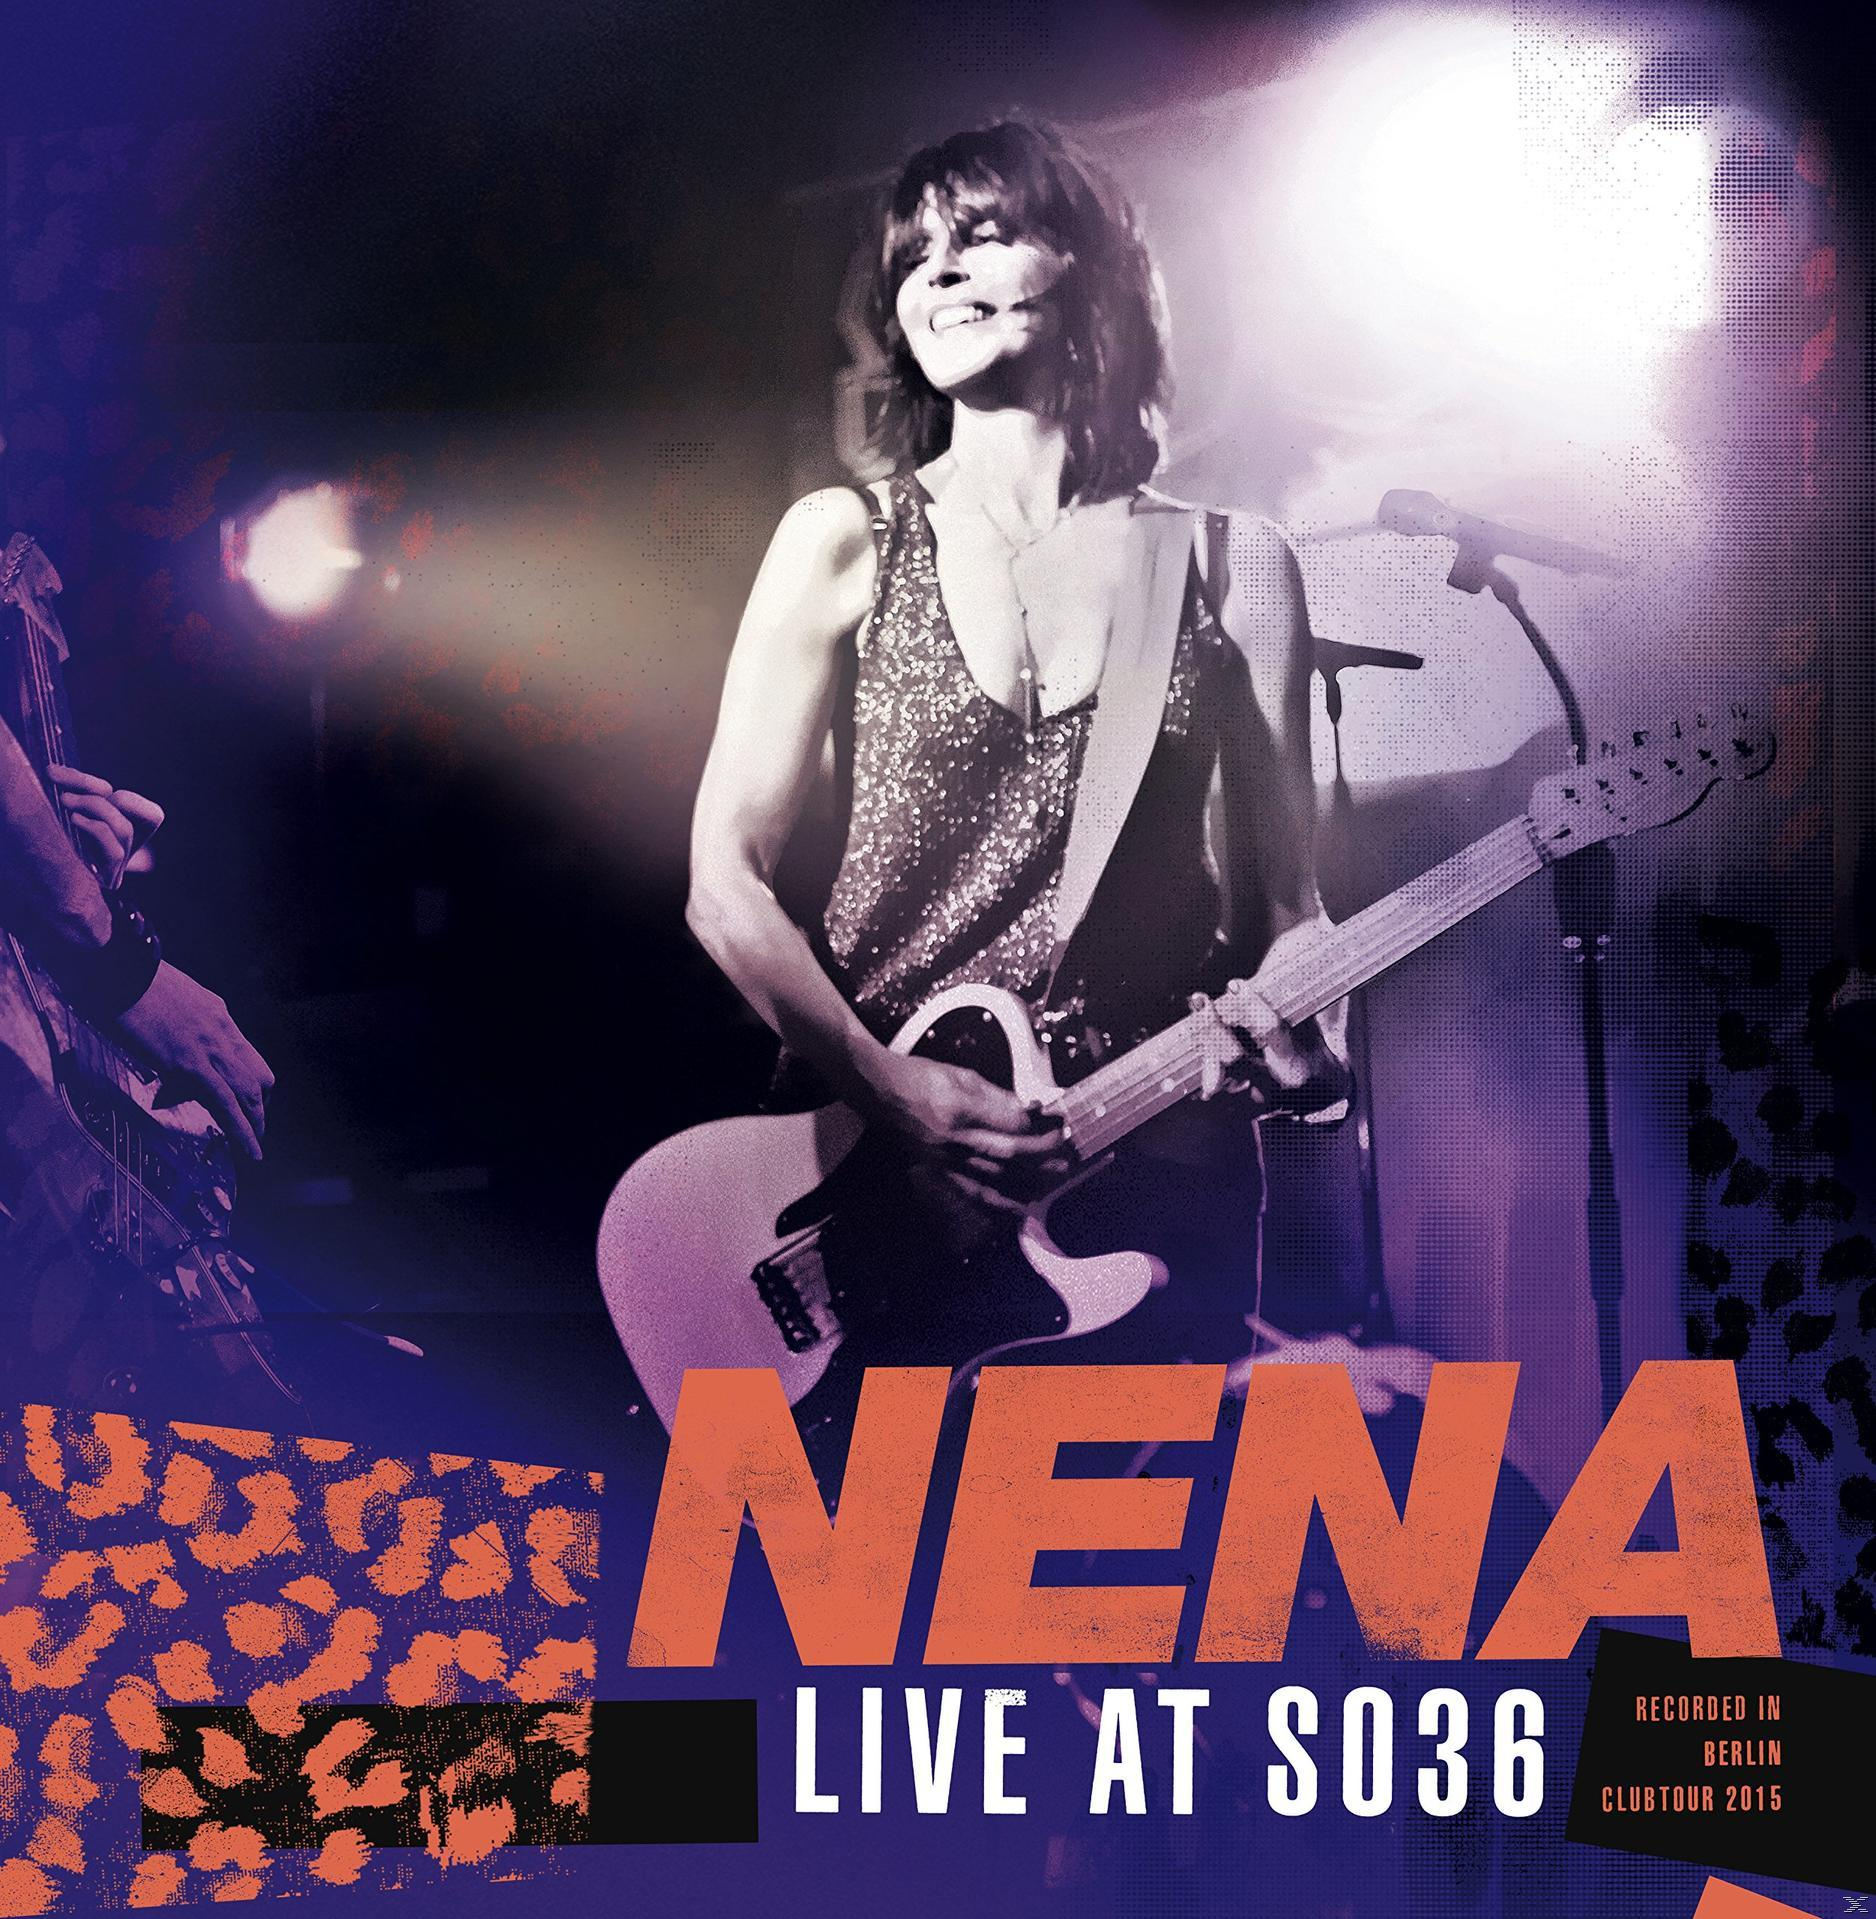 at - - Live Nena SO36 (Vinyl)